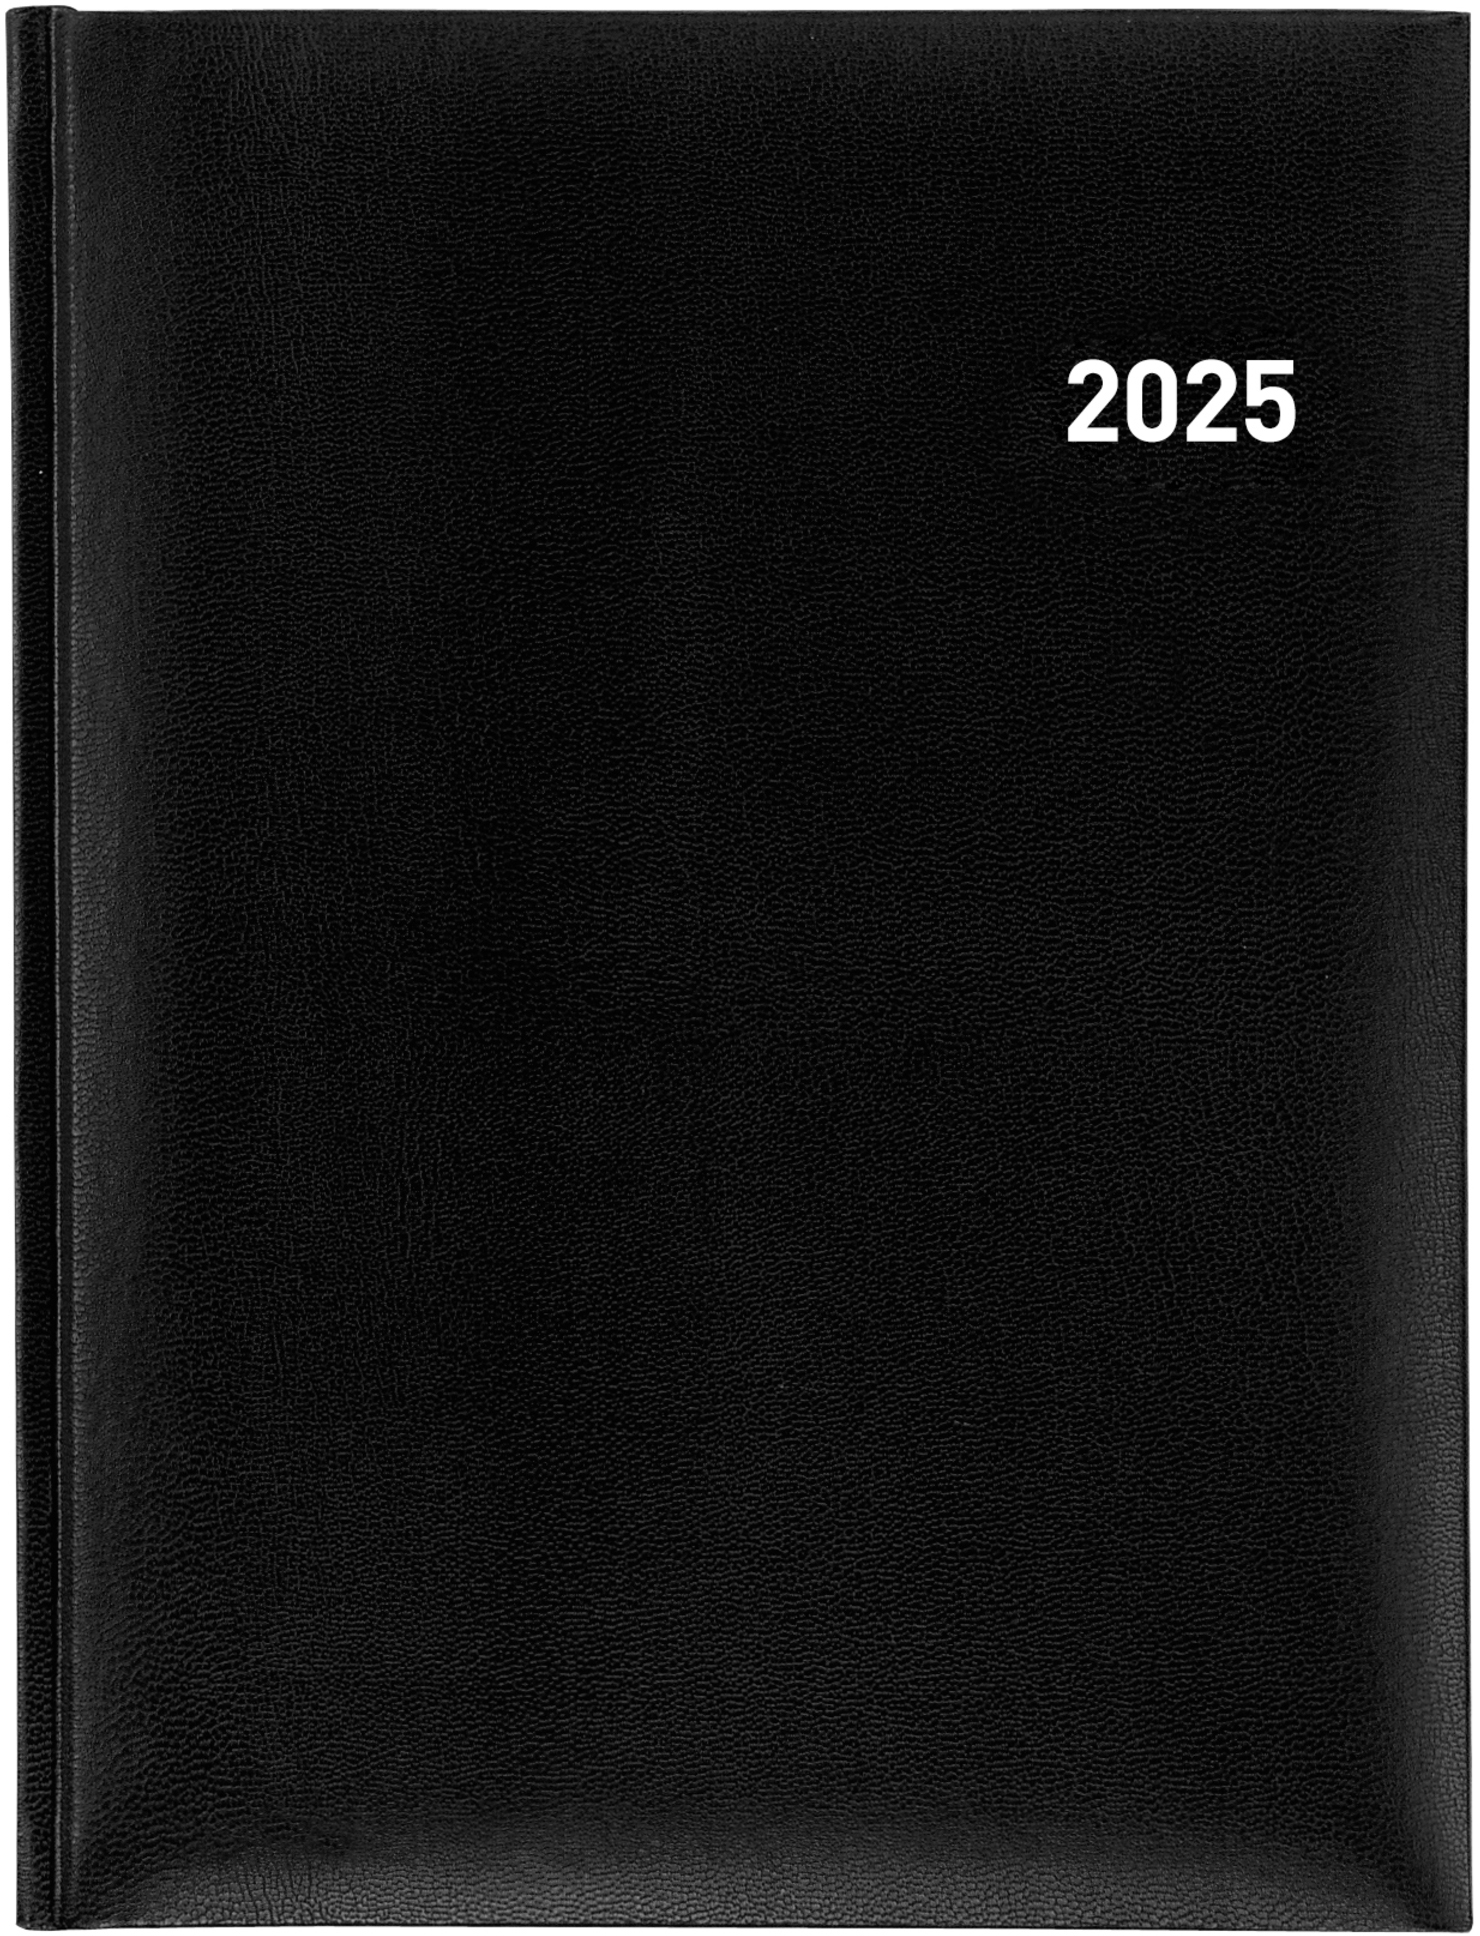 BIELLA Agenda Orario 2025 809301020025 1S/2P noir ML 17.8x23.5cm